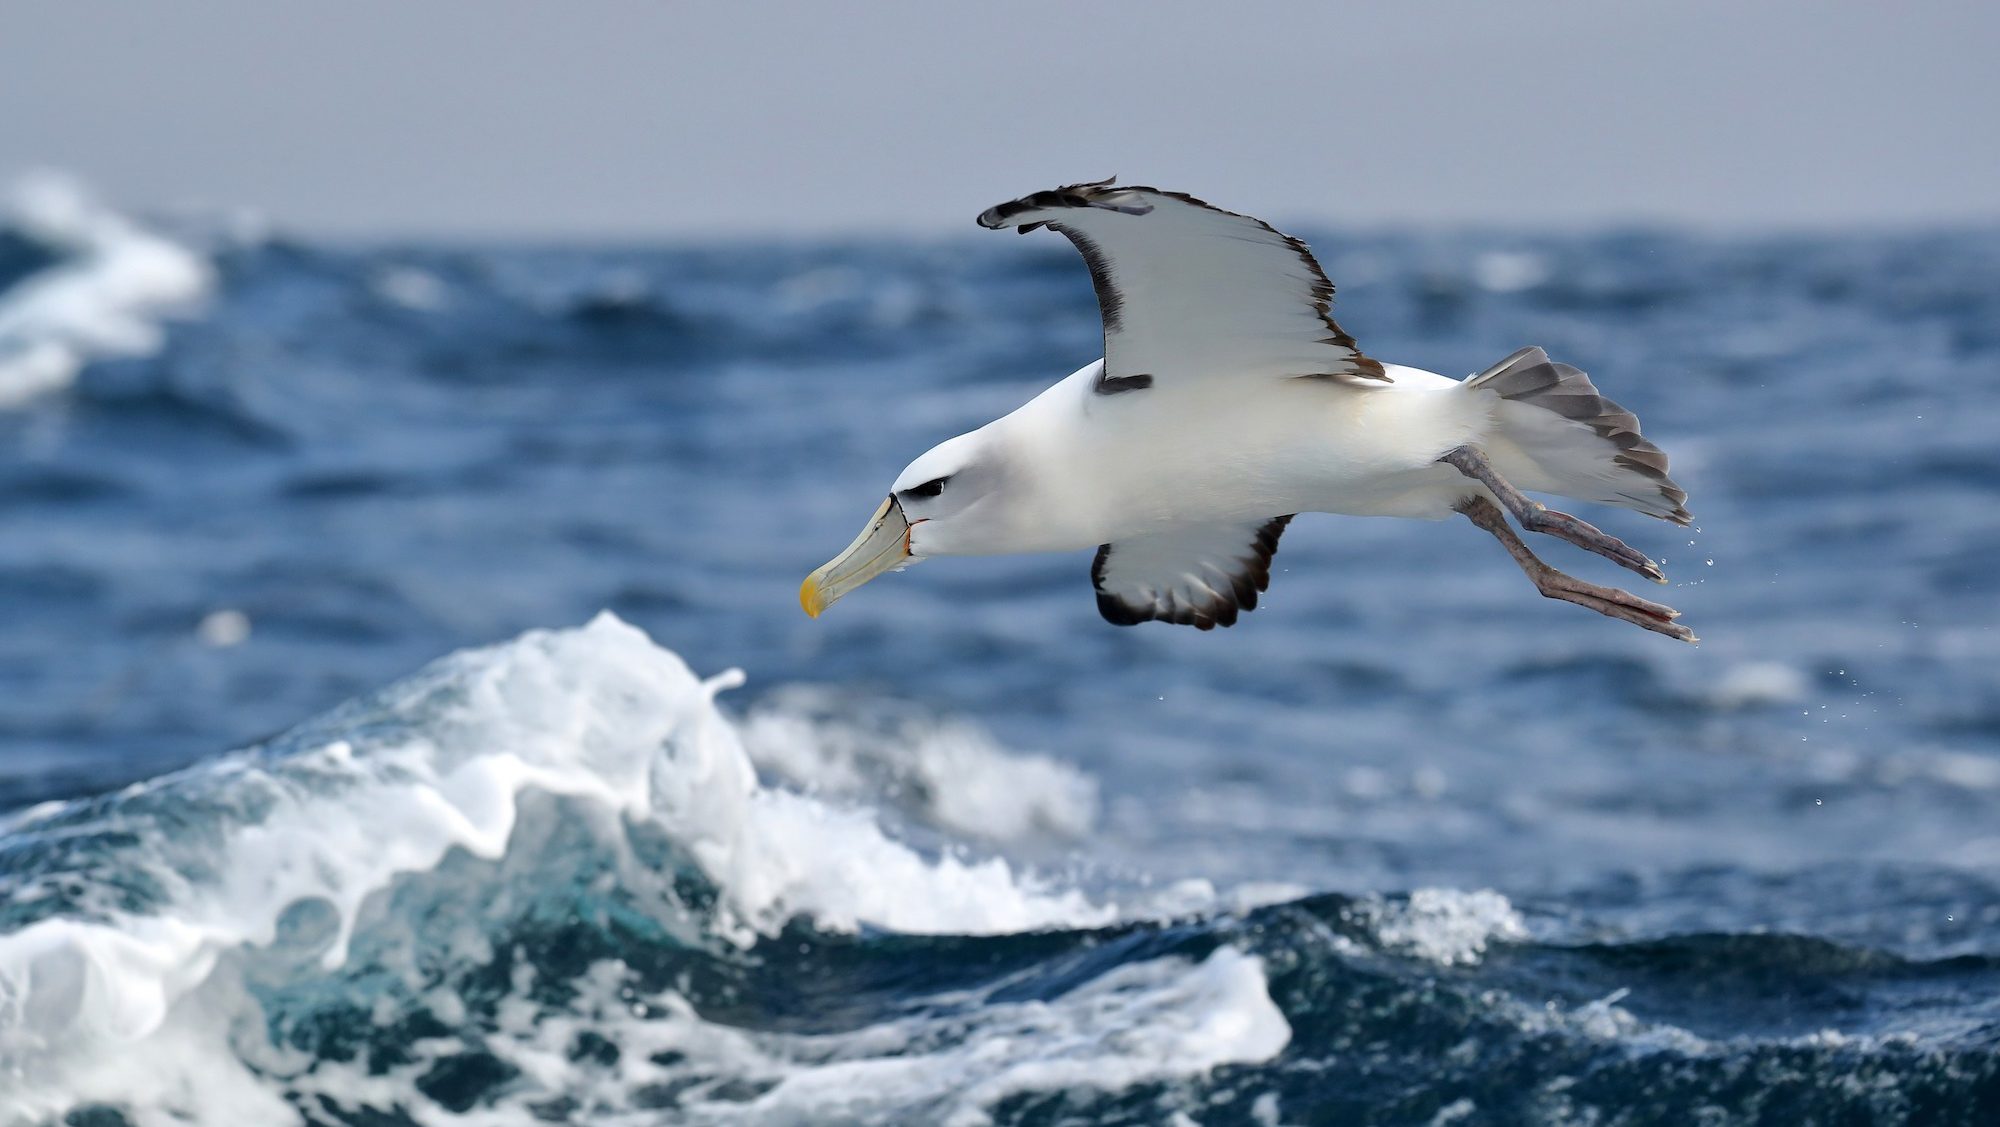 albatross flying over a breaking wave